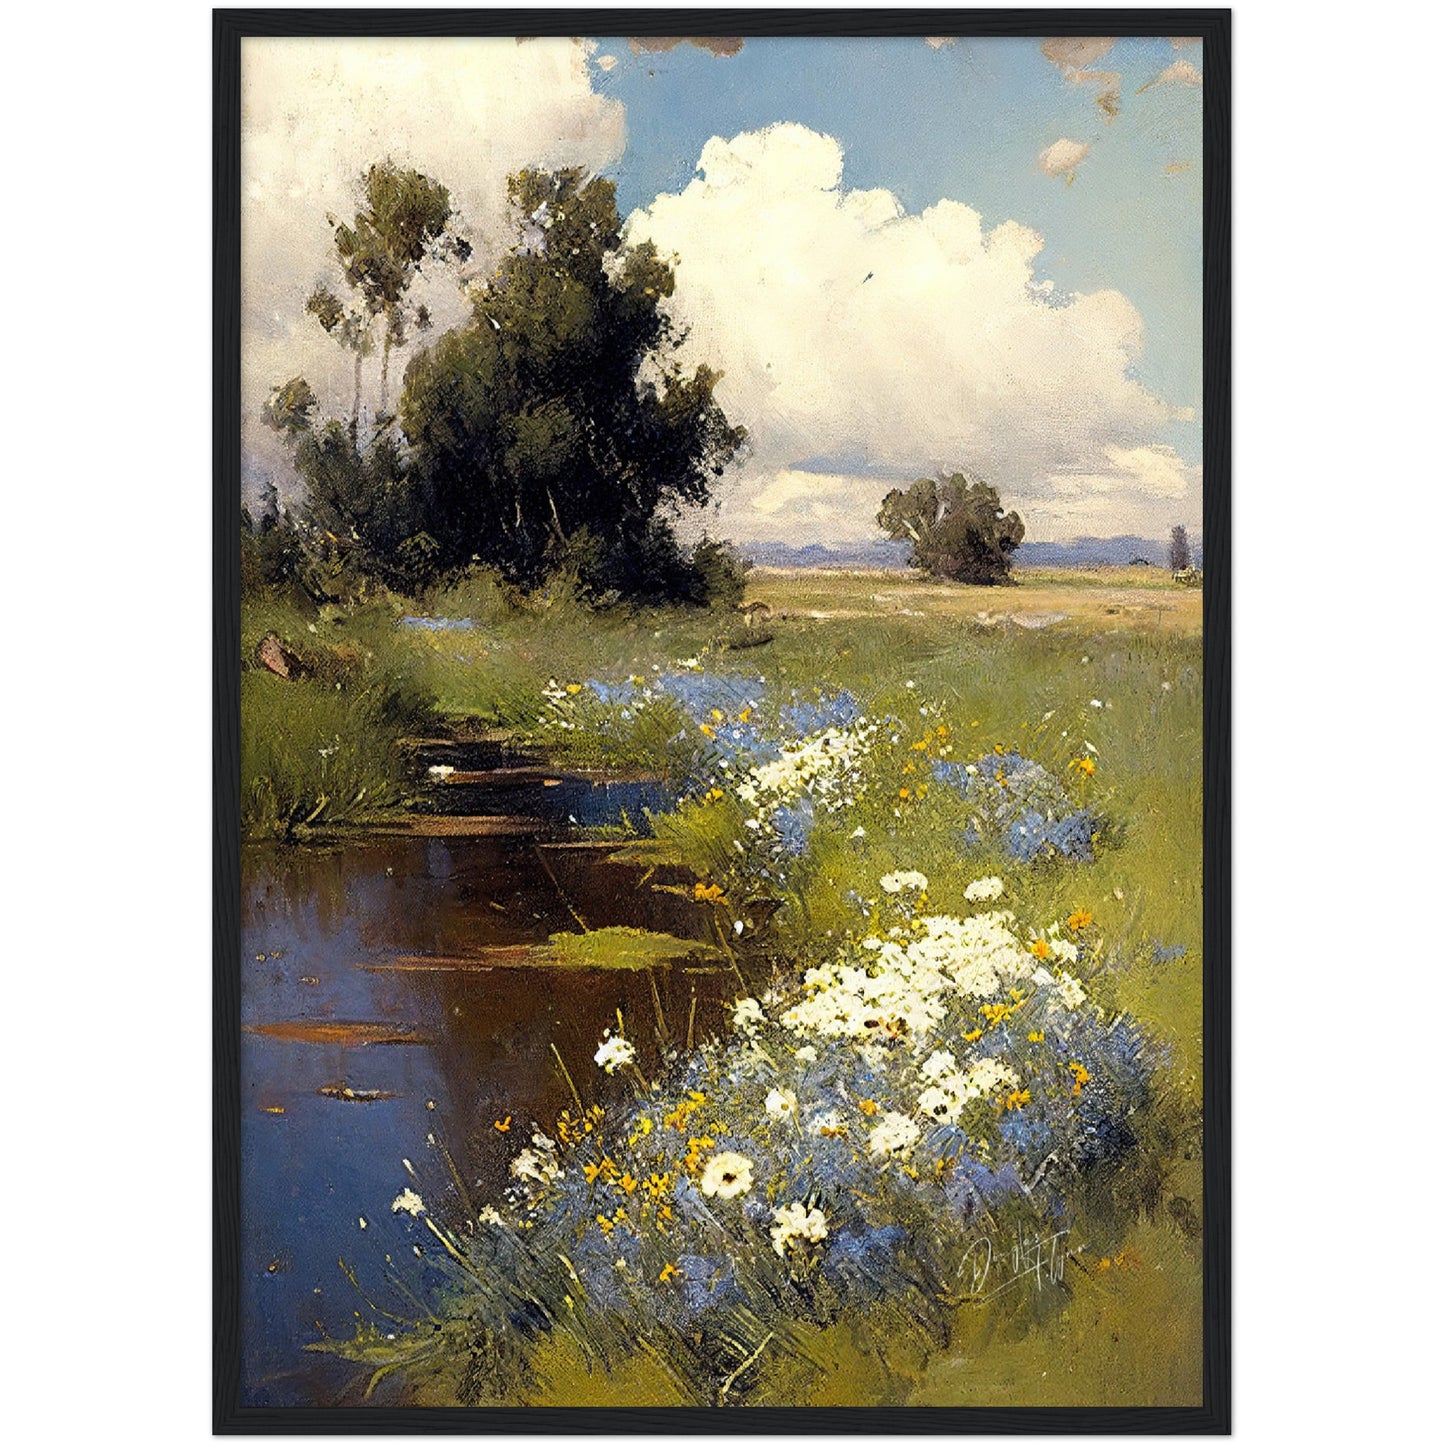 »Wildflowers« retro poster